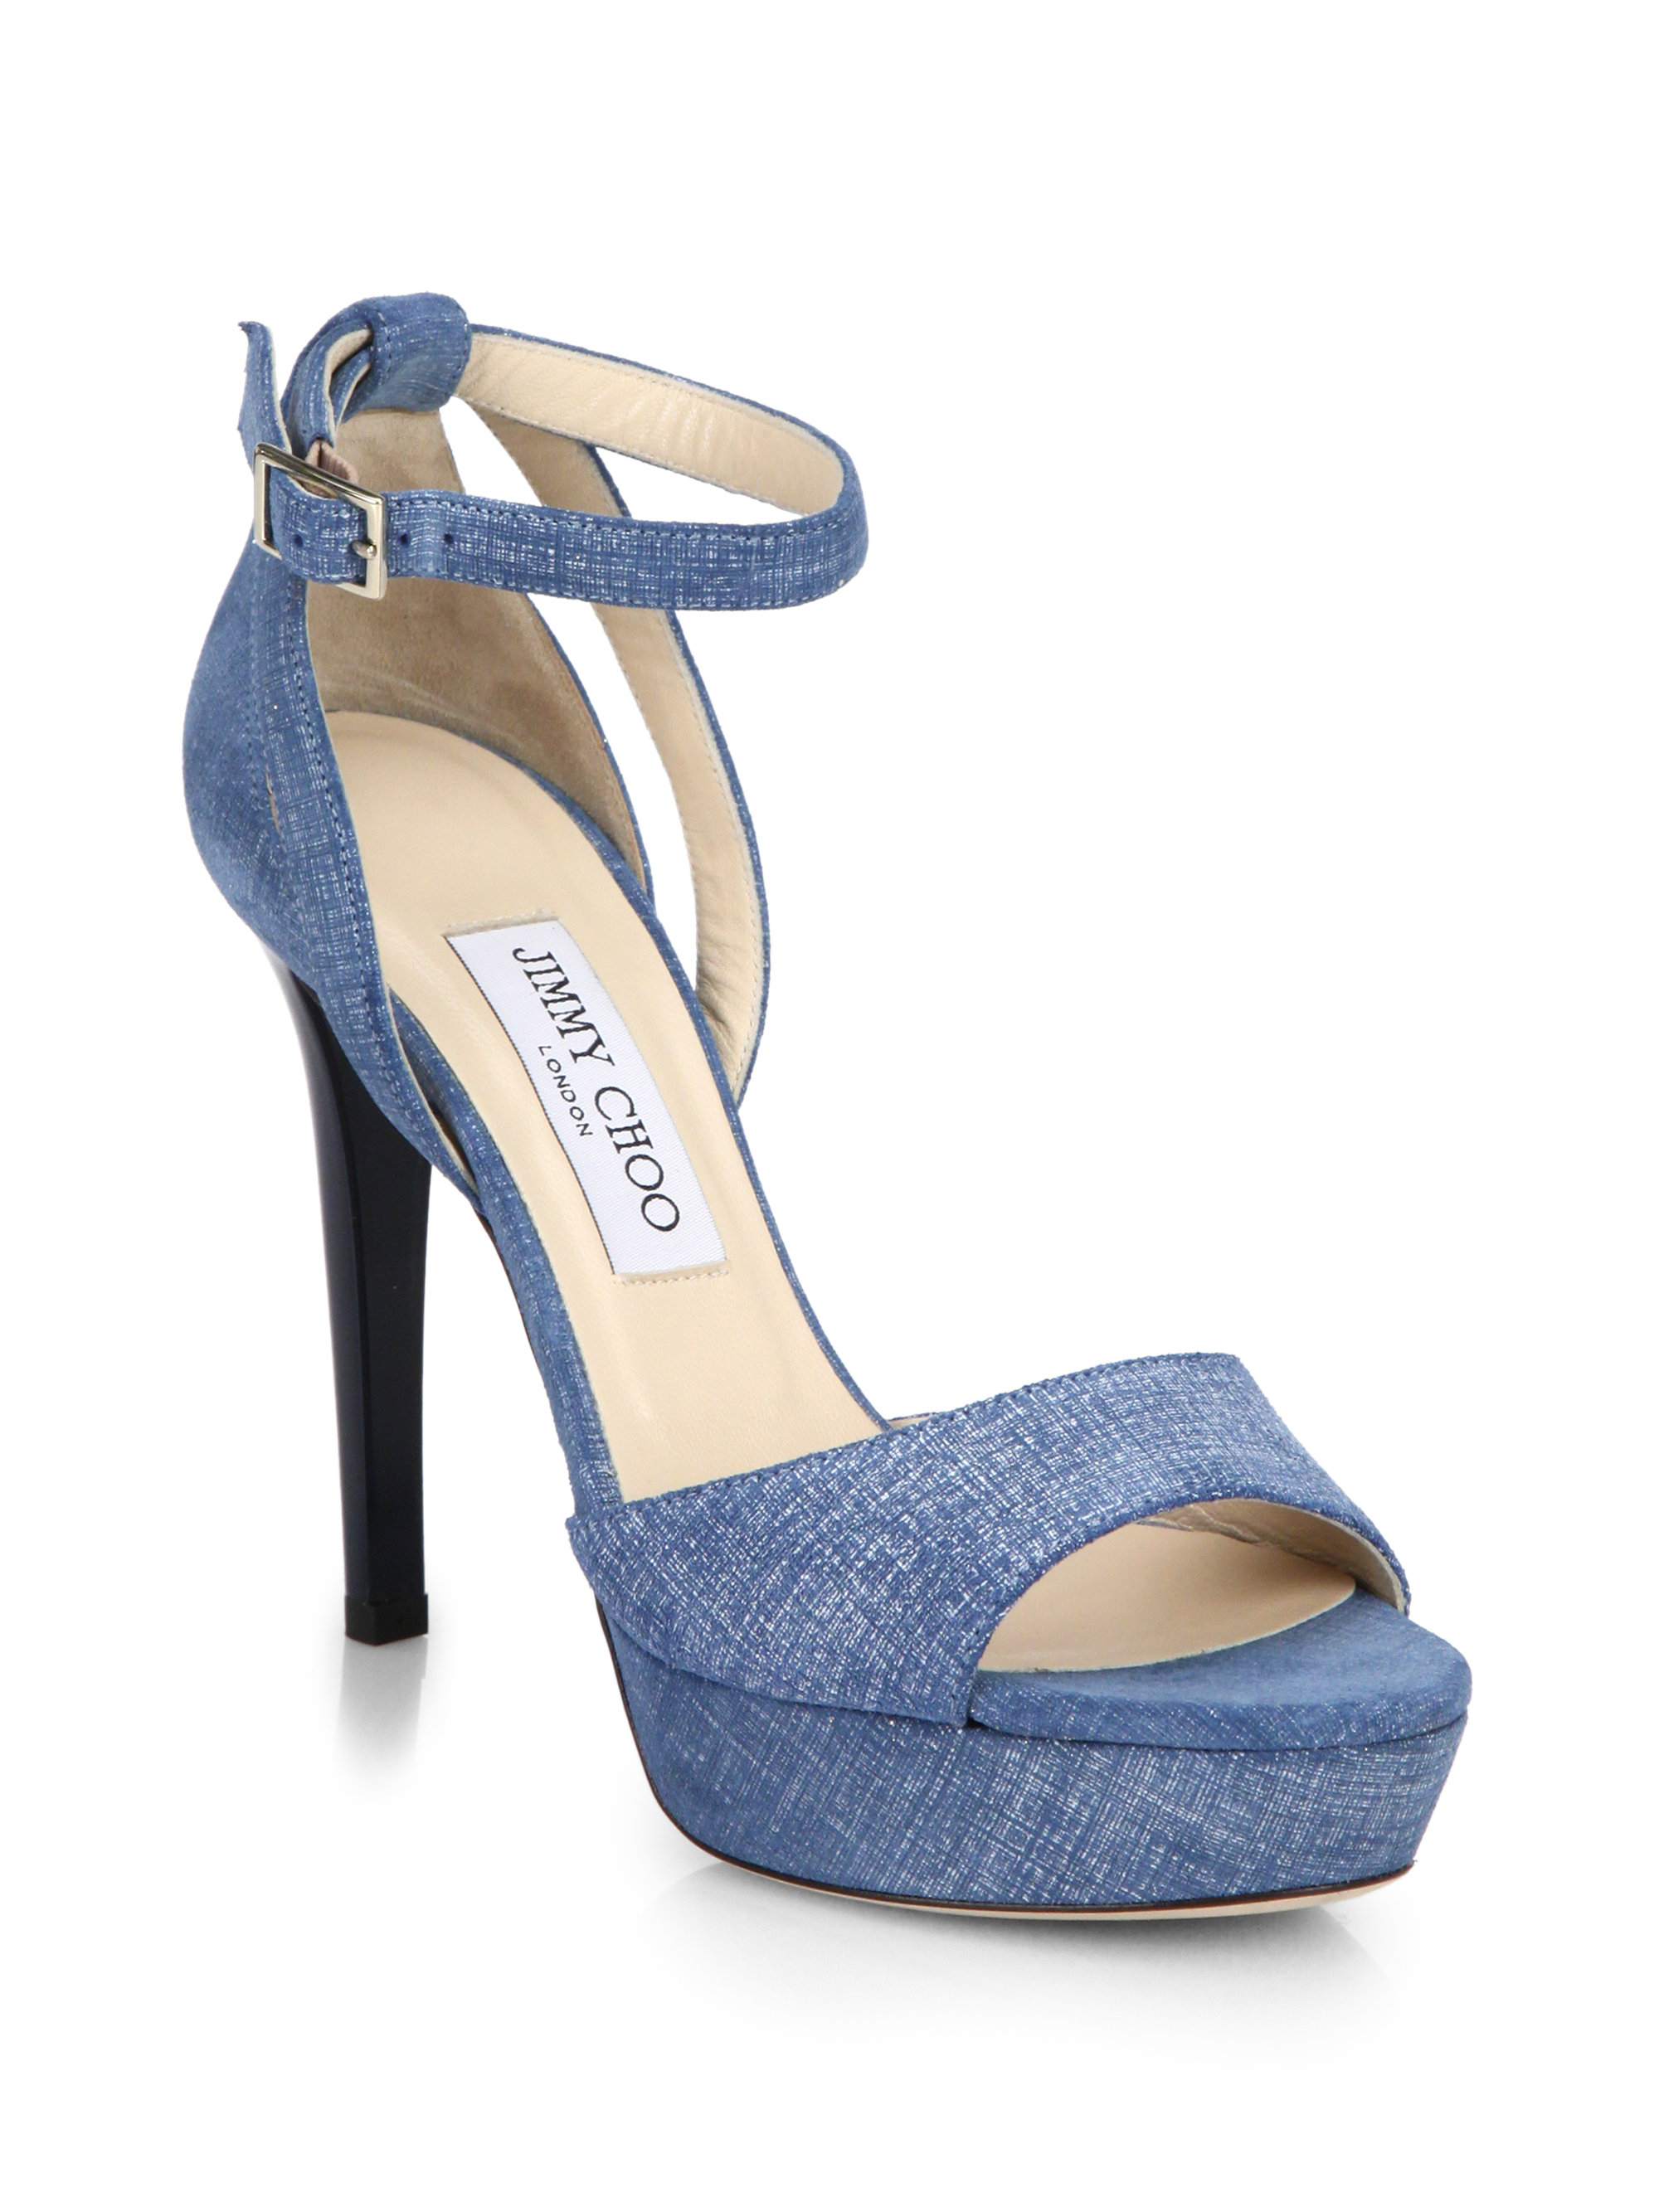 Jimmy choo Kayden Denim Platform Sandals in Blue | Lyst